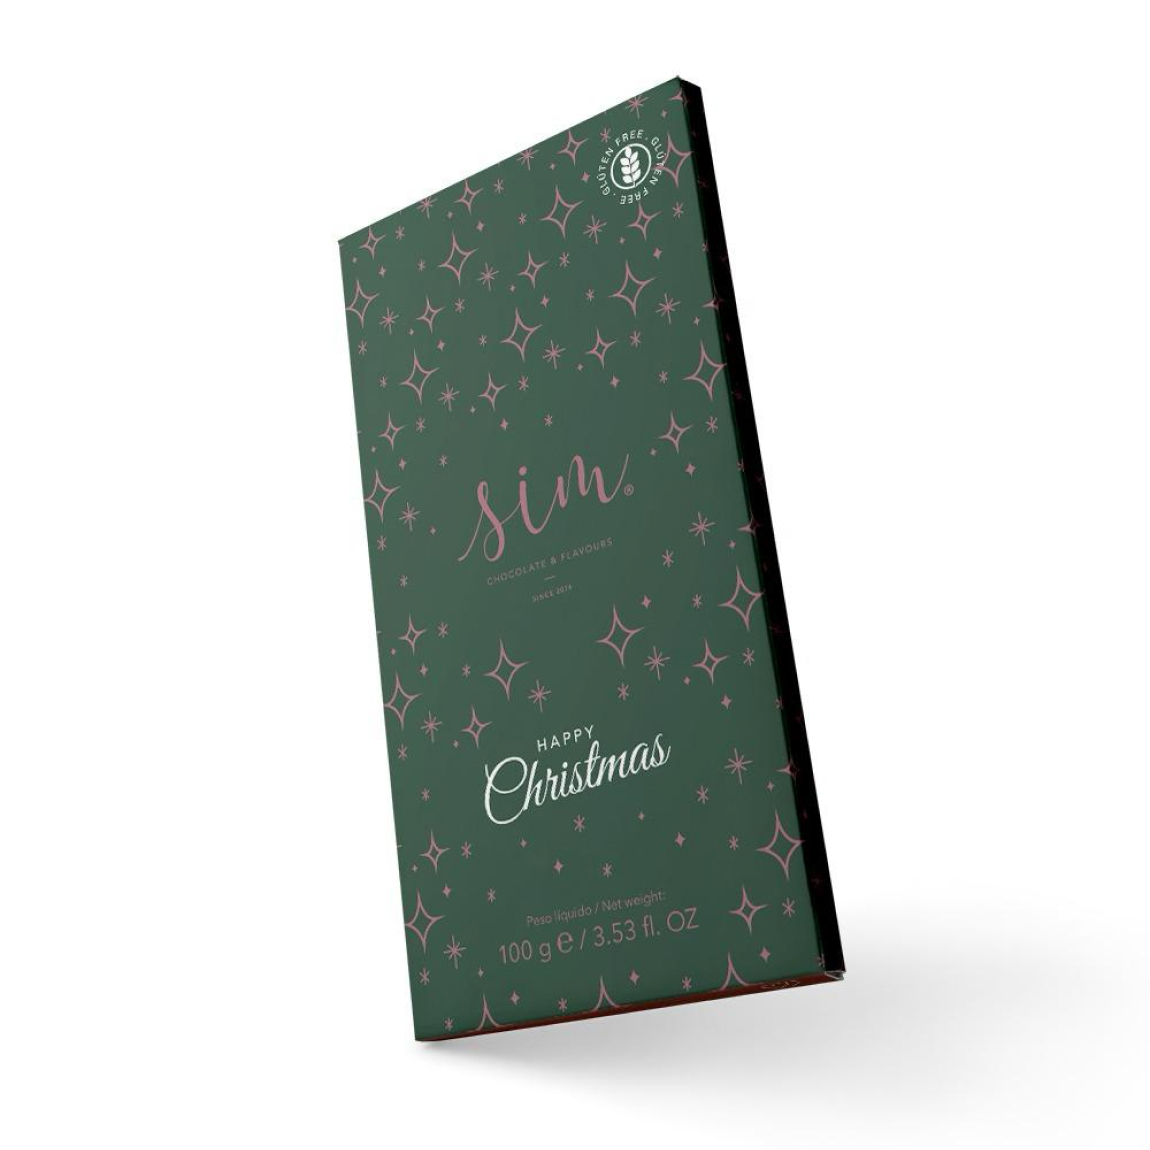 Tablete HAPPY CHRISTMAS Chocolate de Leite